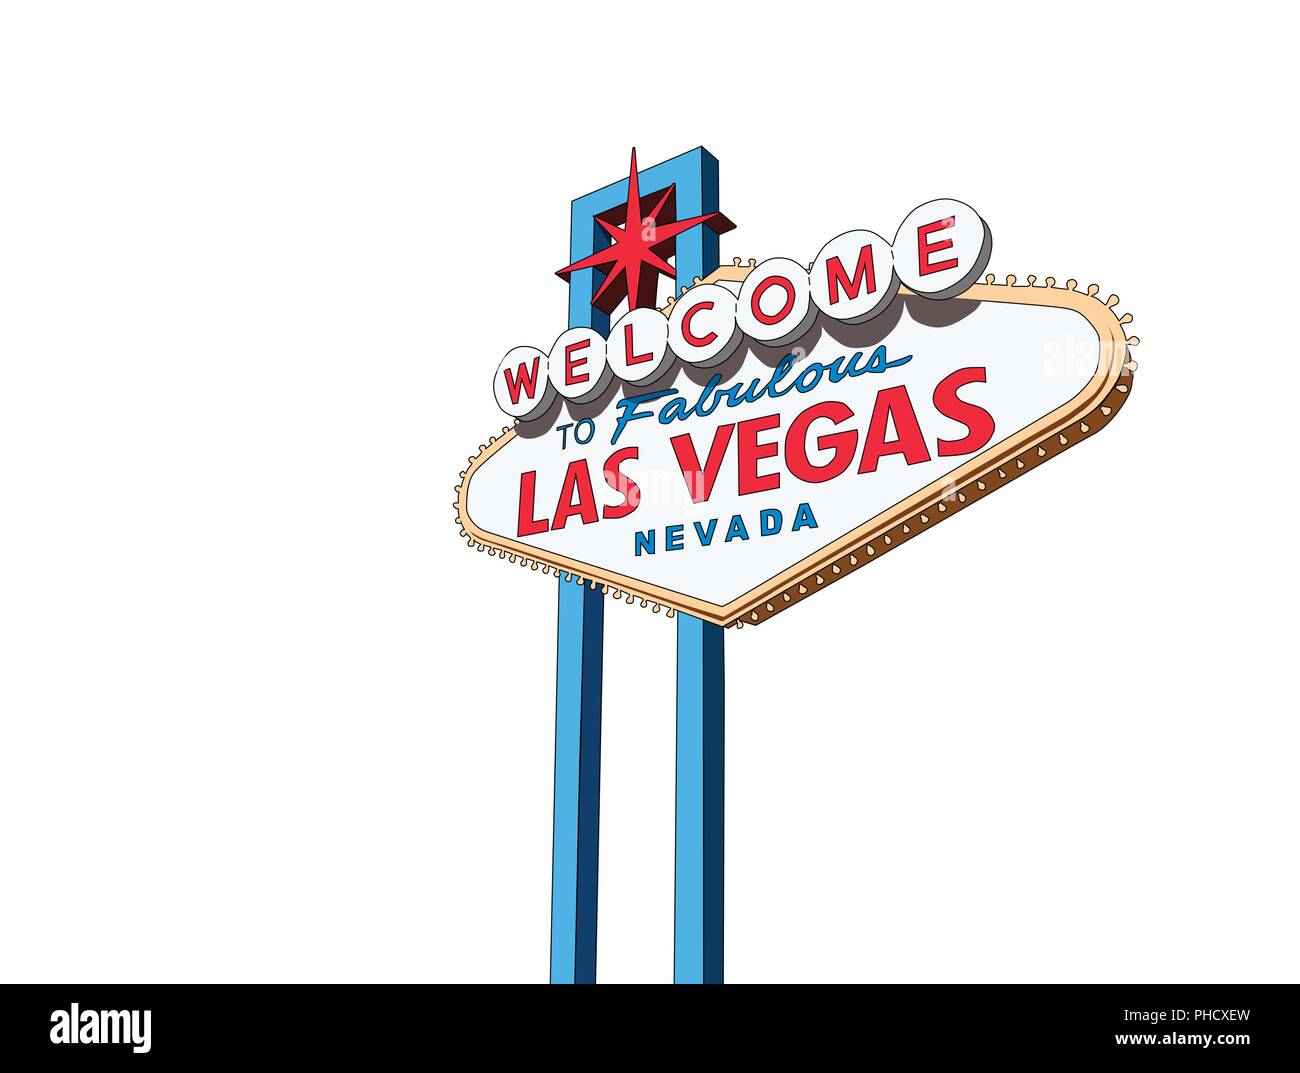 Benvenuti a Las Vegas Nevada segno illustrazione vettoriale di isolamento. Illustrazione Vettoriale